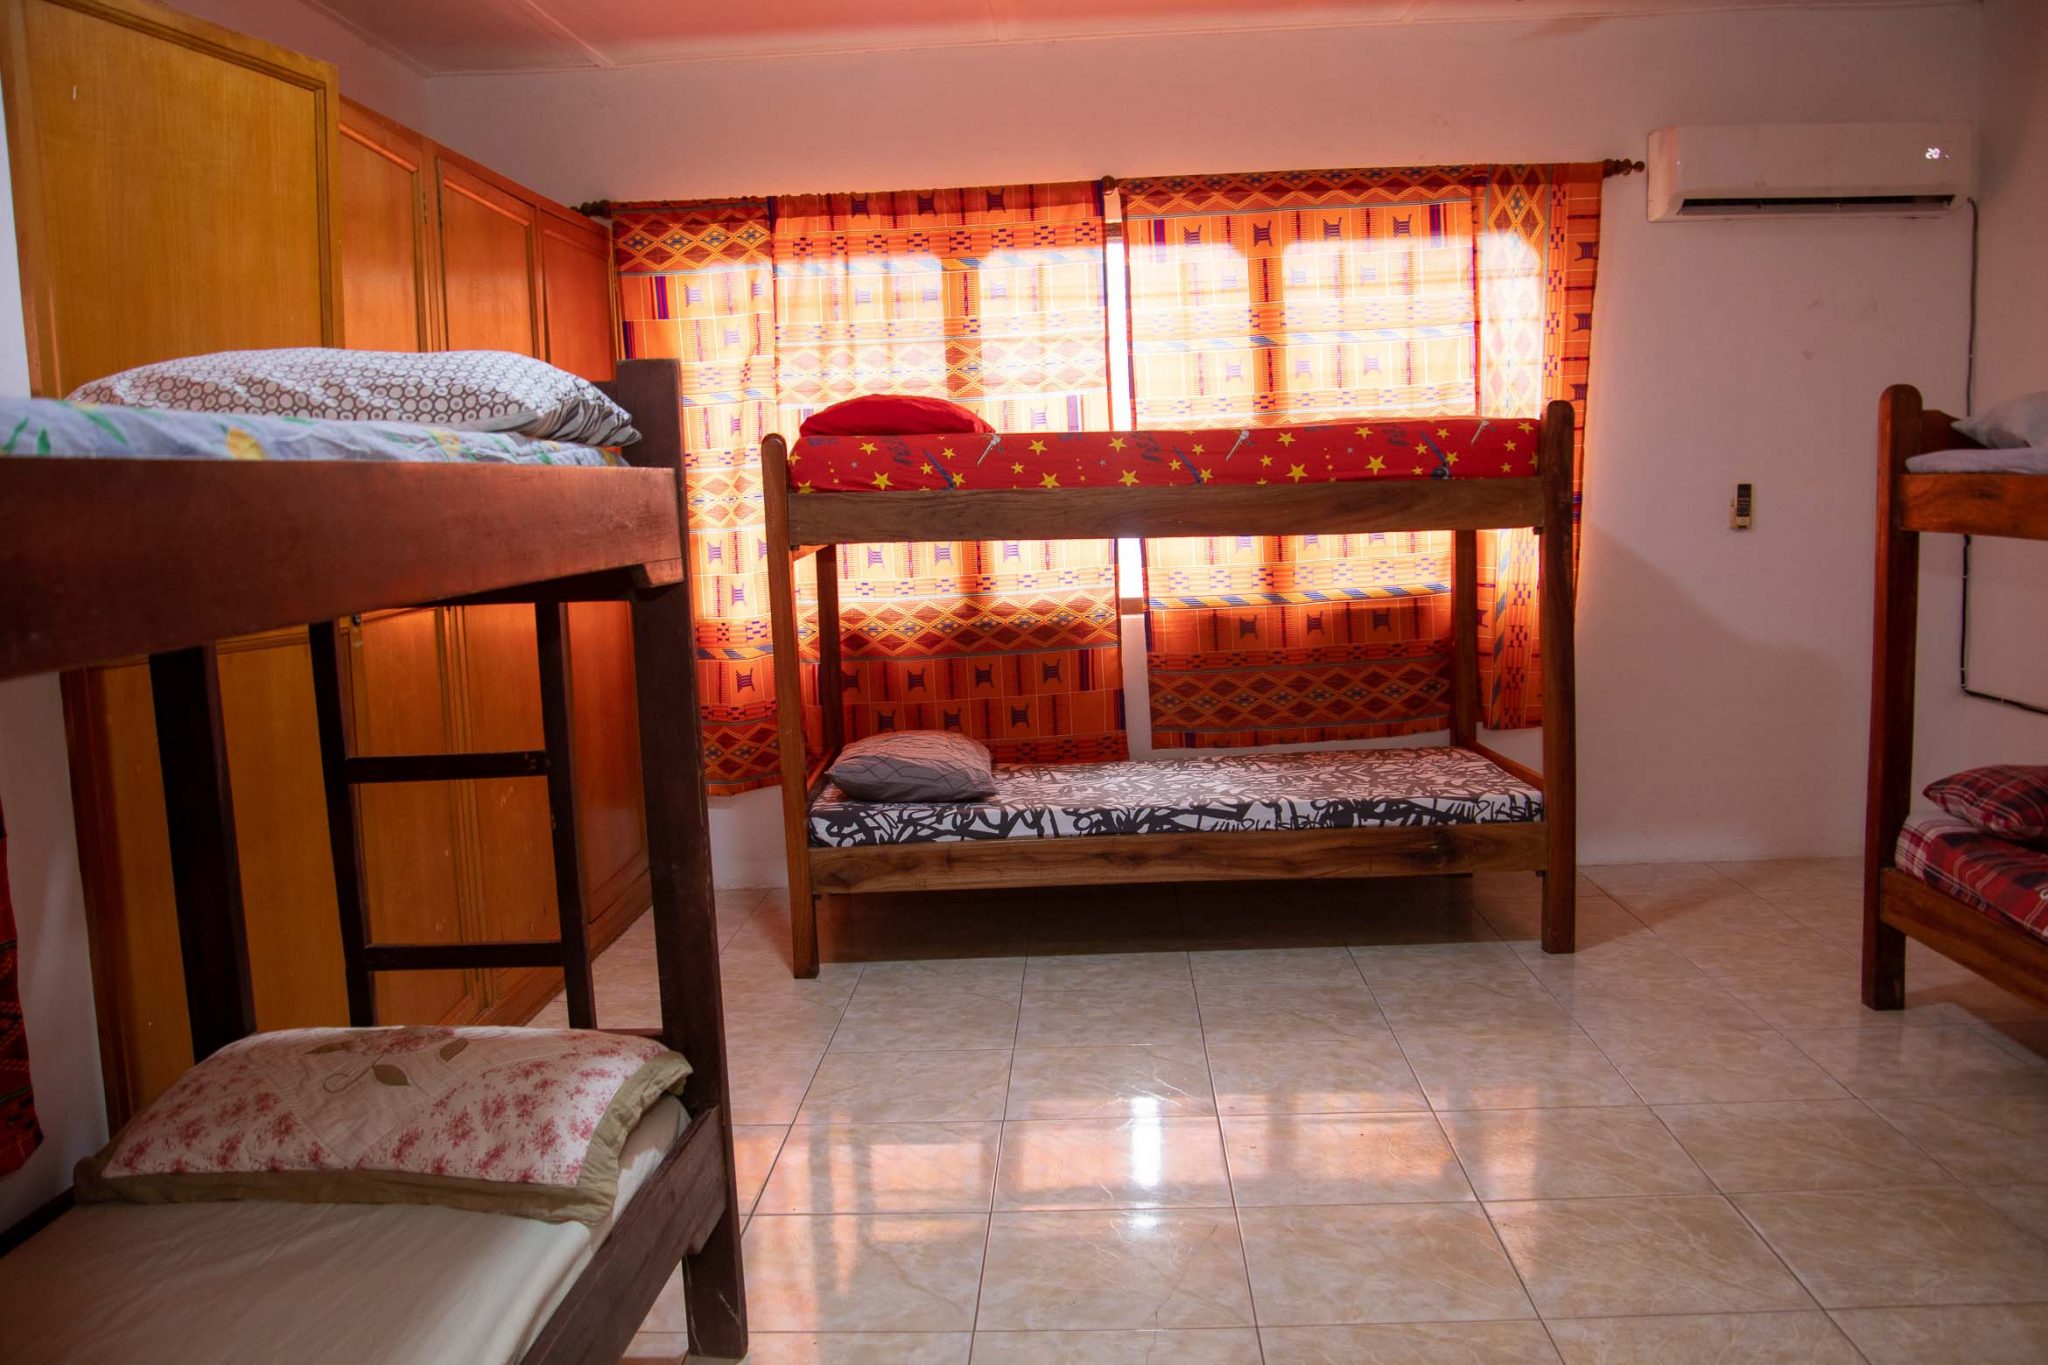 Accra Ghana dorm room 18 scaled - Physiotherapy Internship Ghana